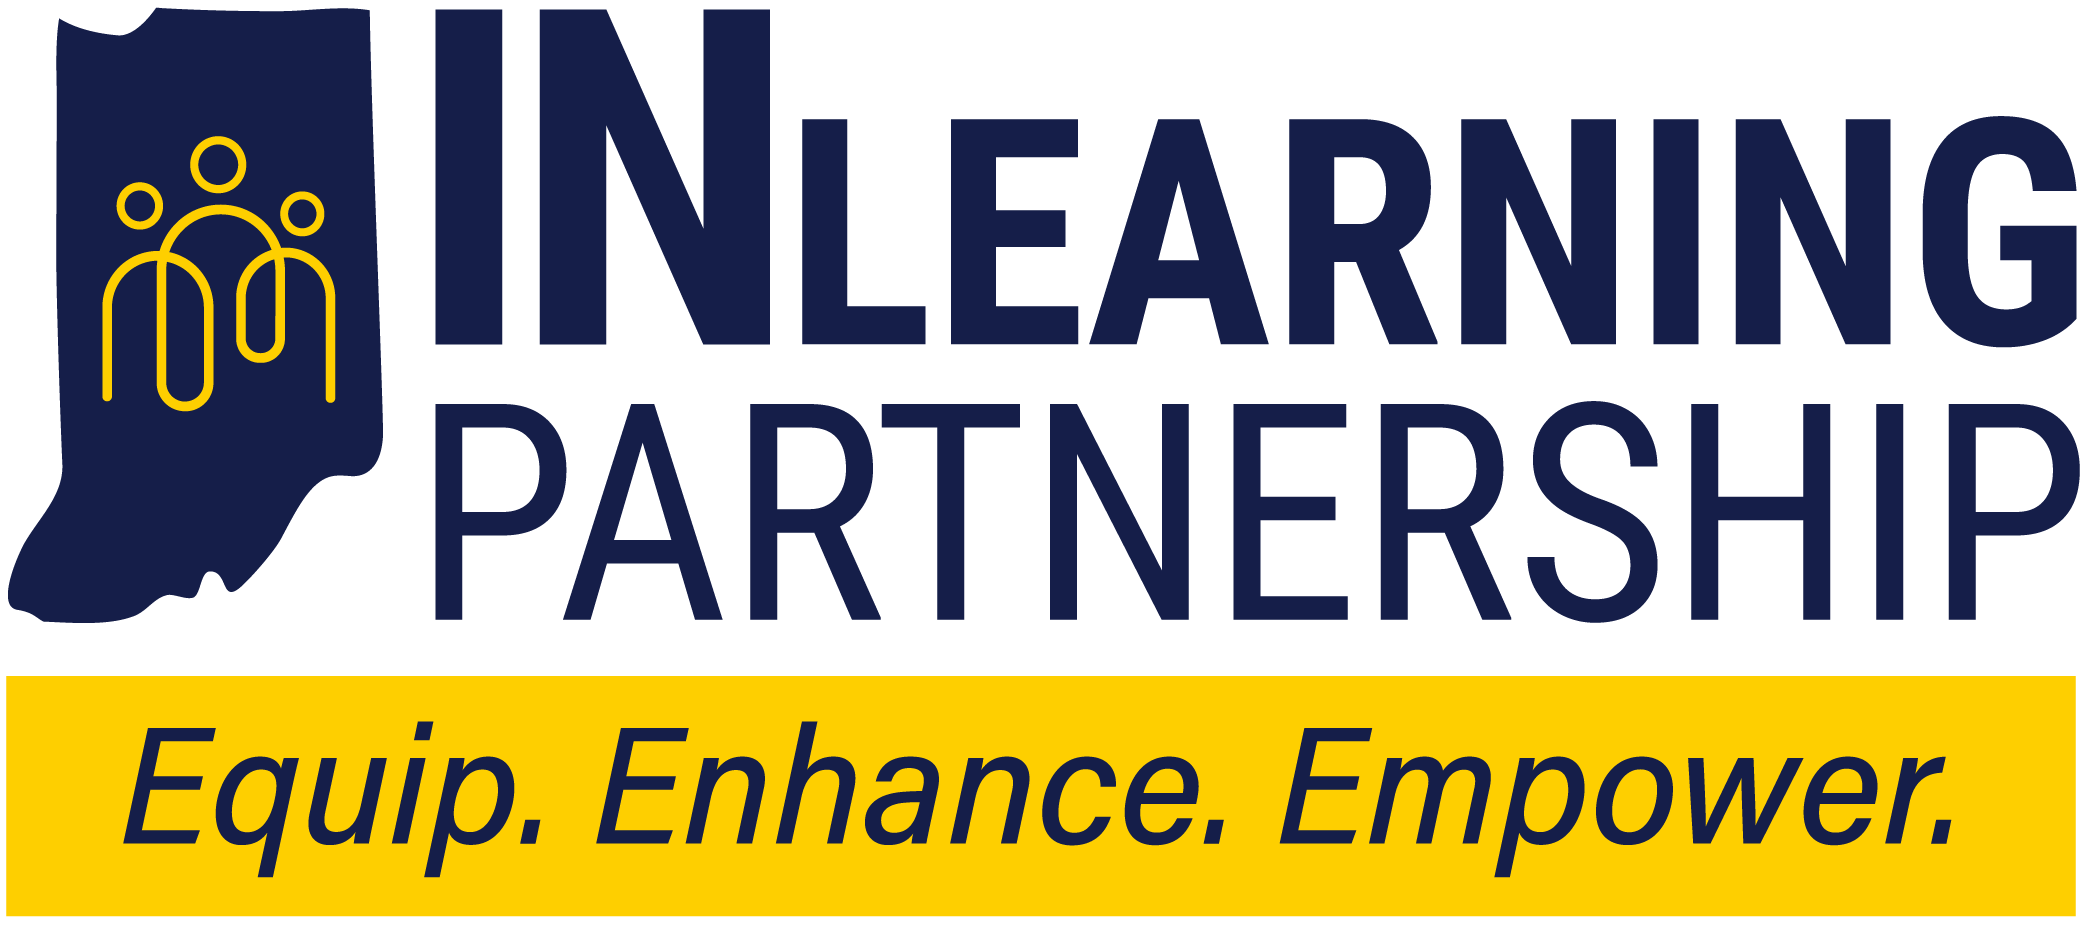 INLearning Partnership: Equip, Enhance, Empower.